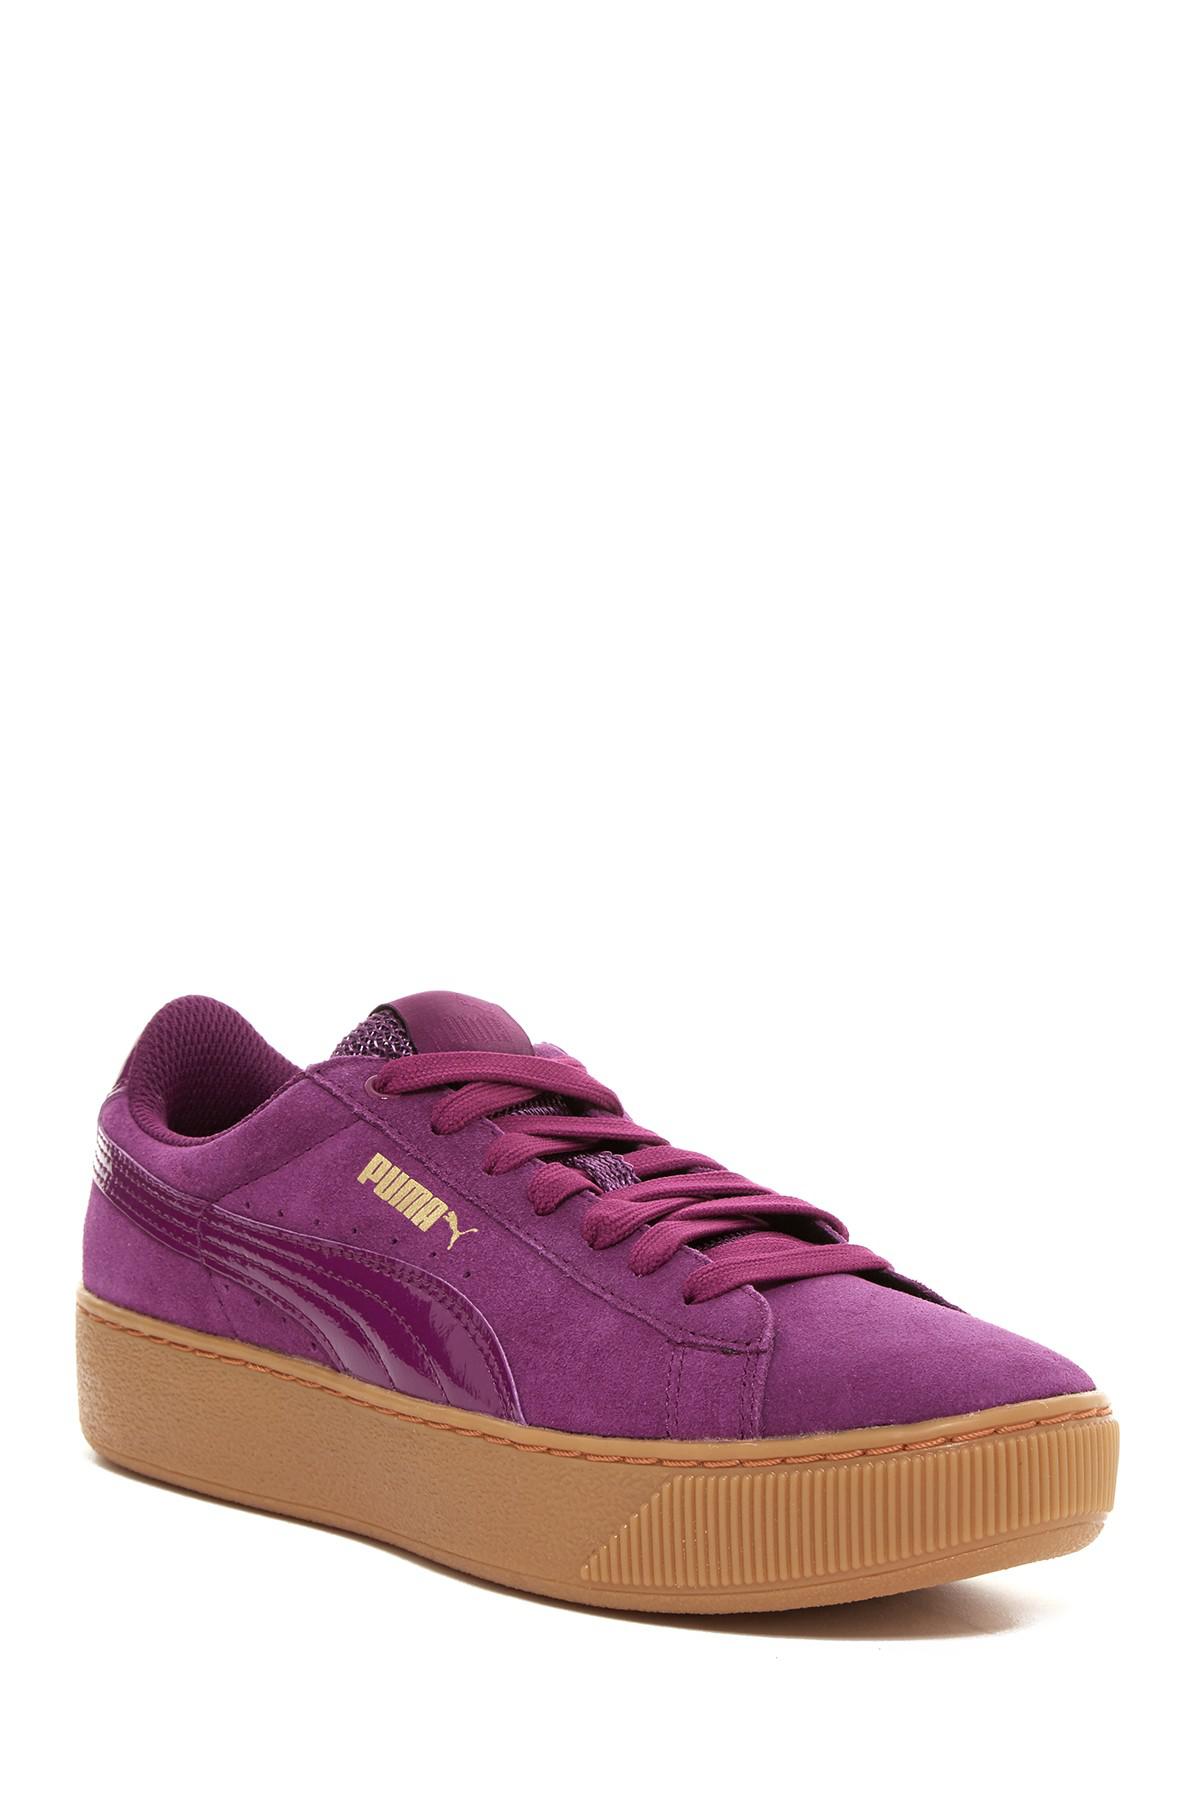 PUMA Suede Vikky Platform Sneaker in Purple | Lyst